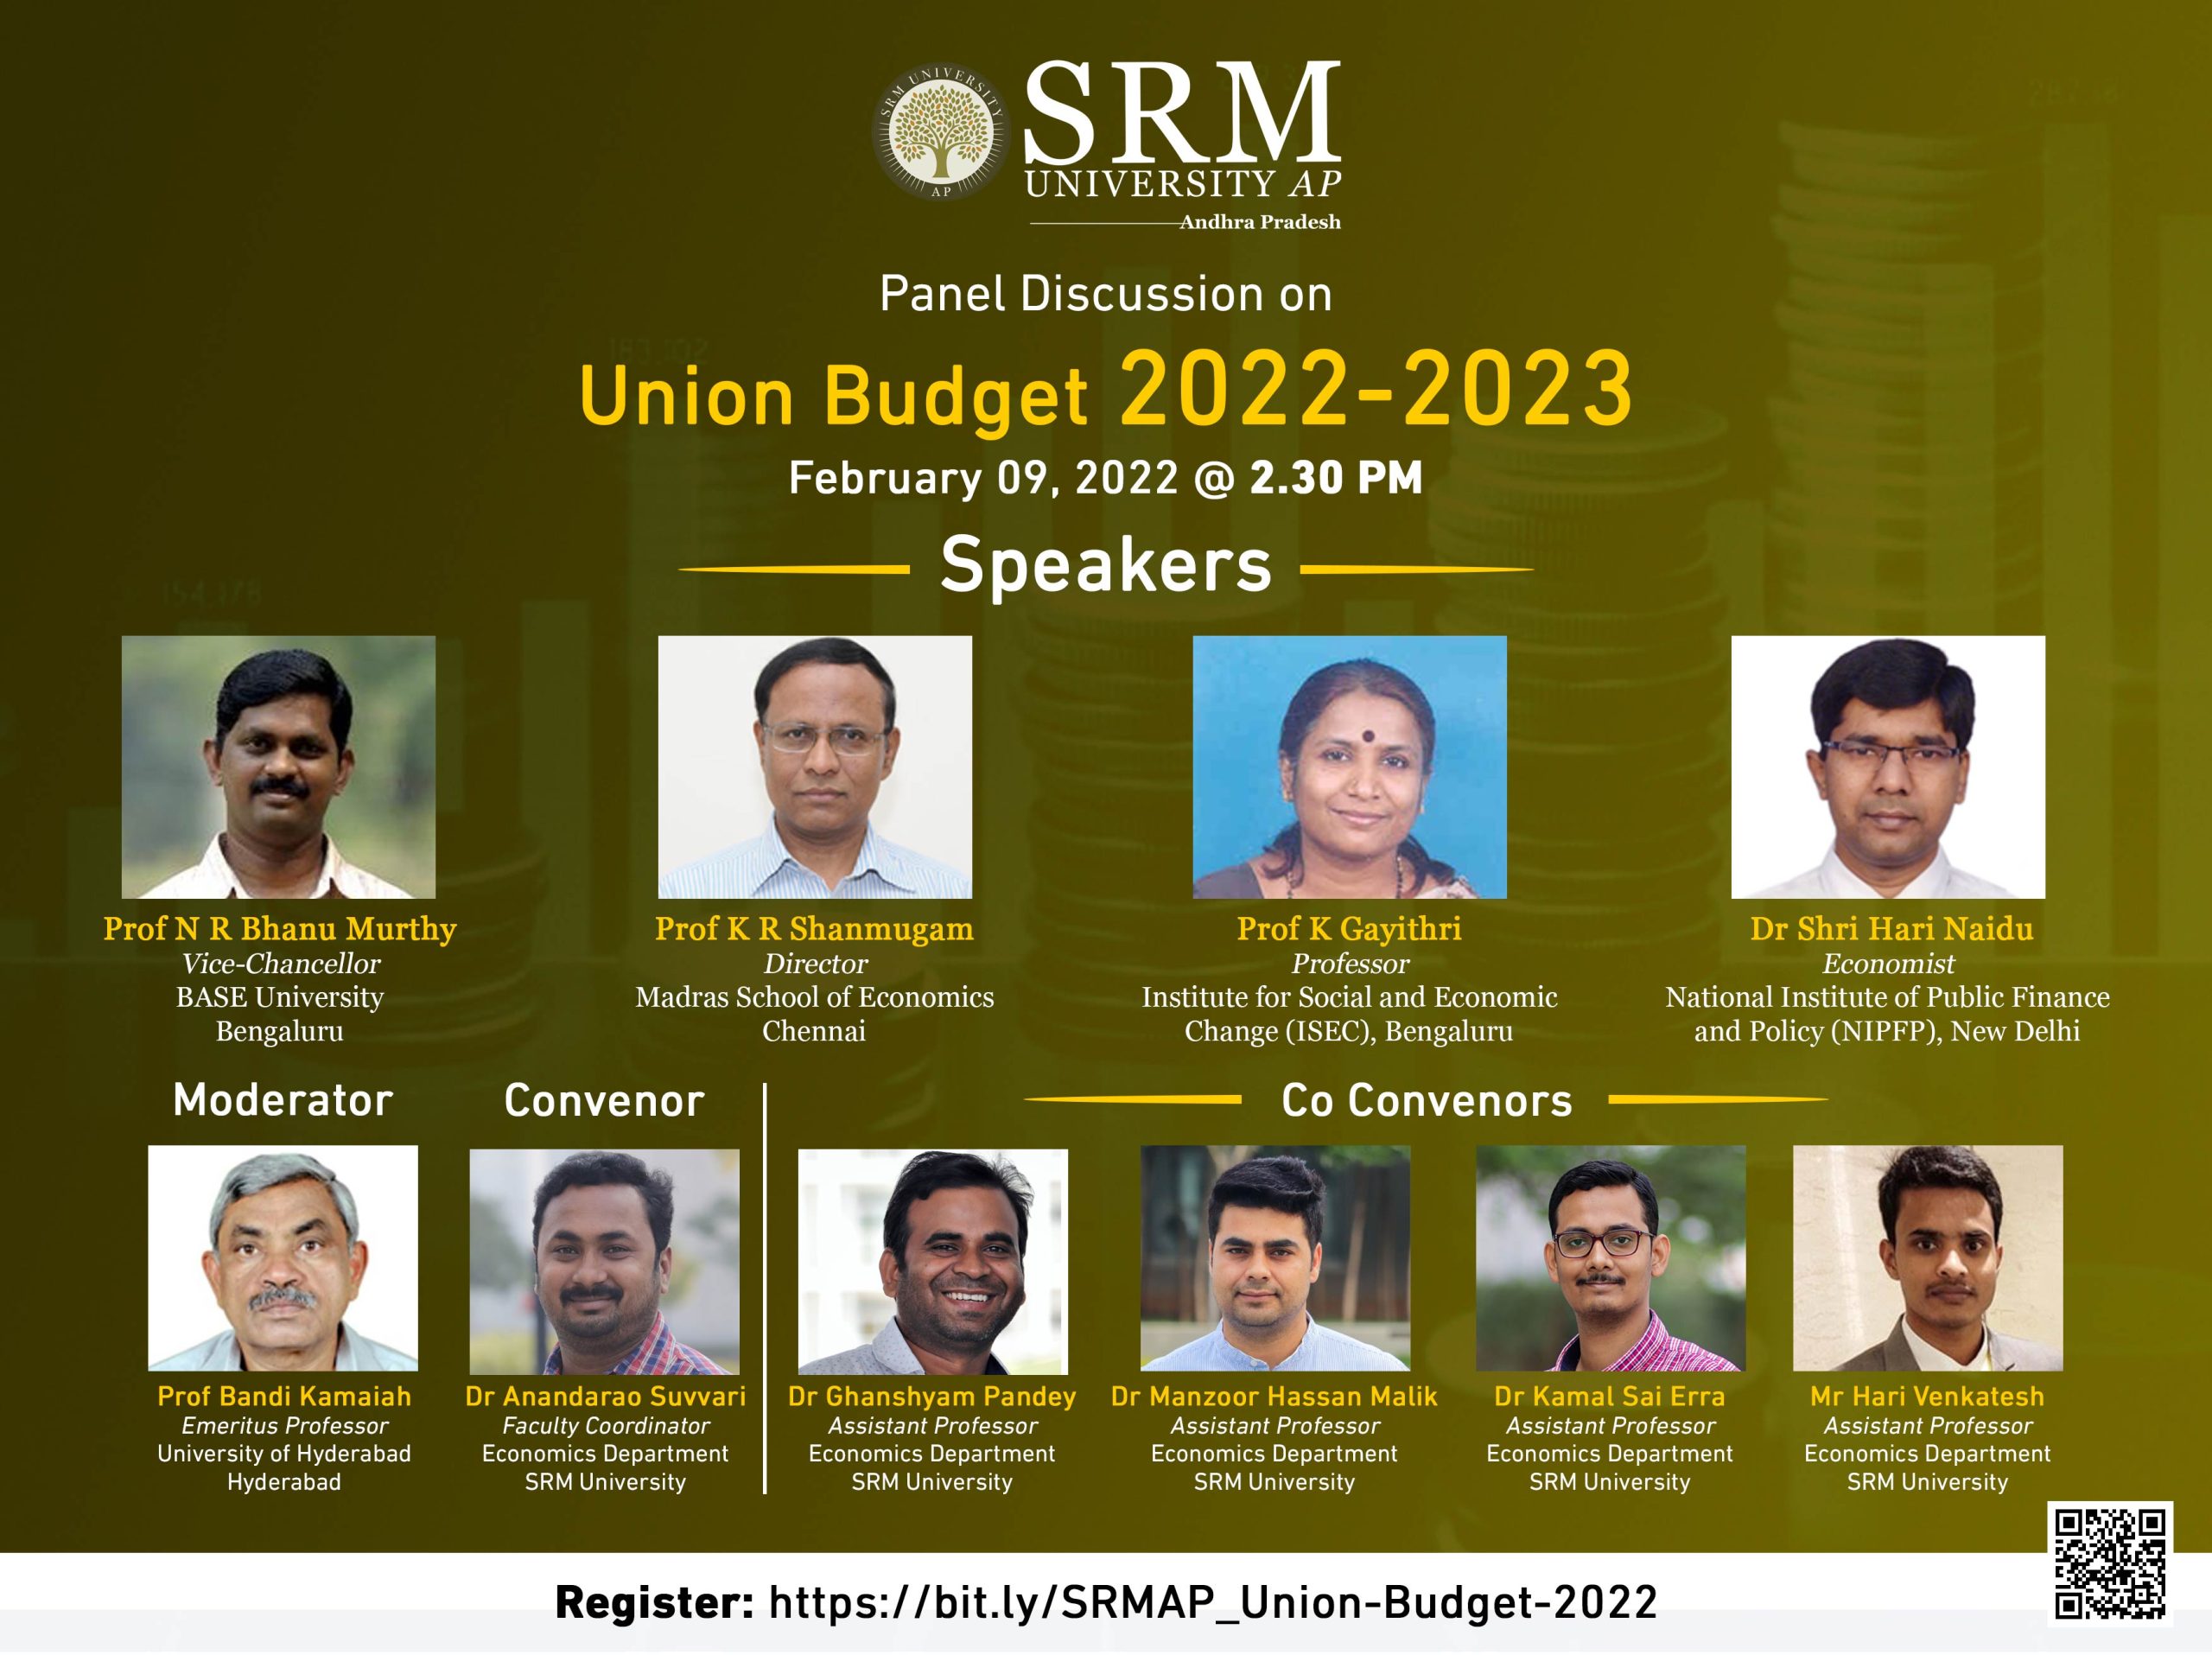 union budget 2022